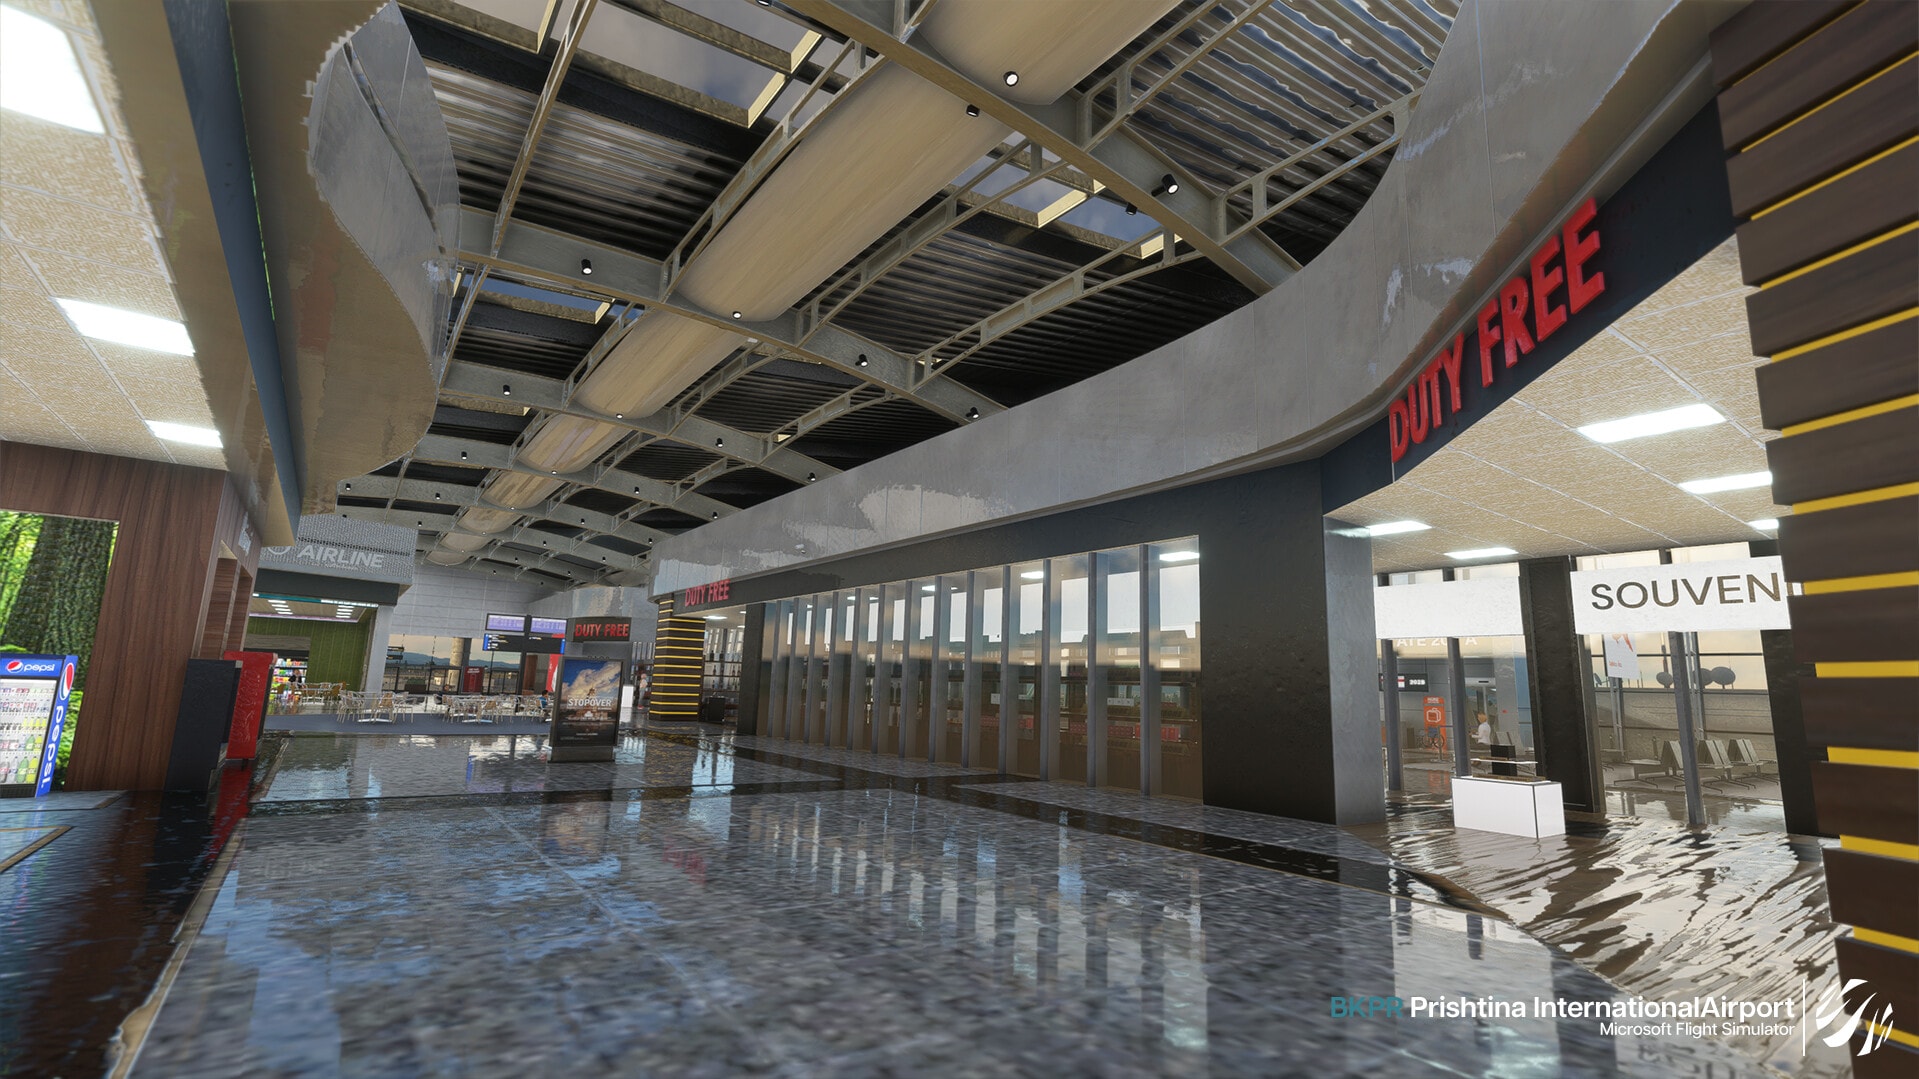 M'M Simulations Released Prishtina Airport for MSFS - Microsoft Flight Simulator, Miltech Simulations, Orbx